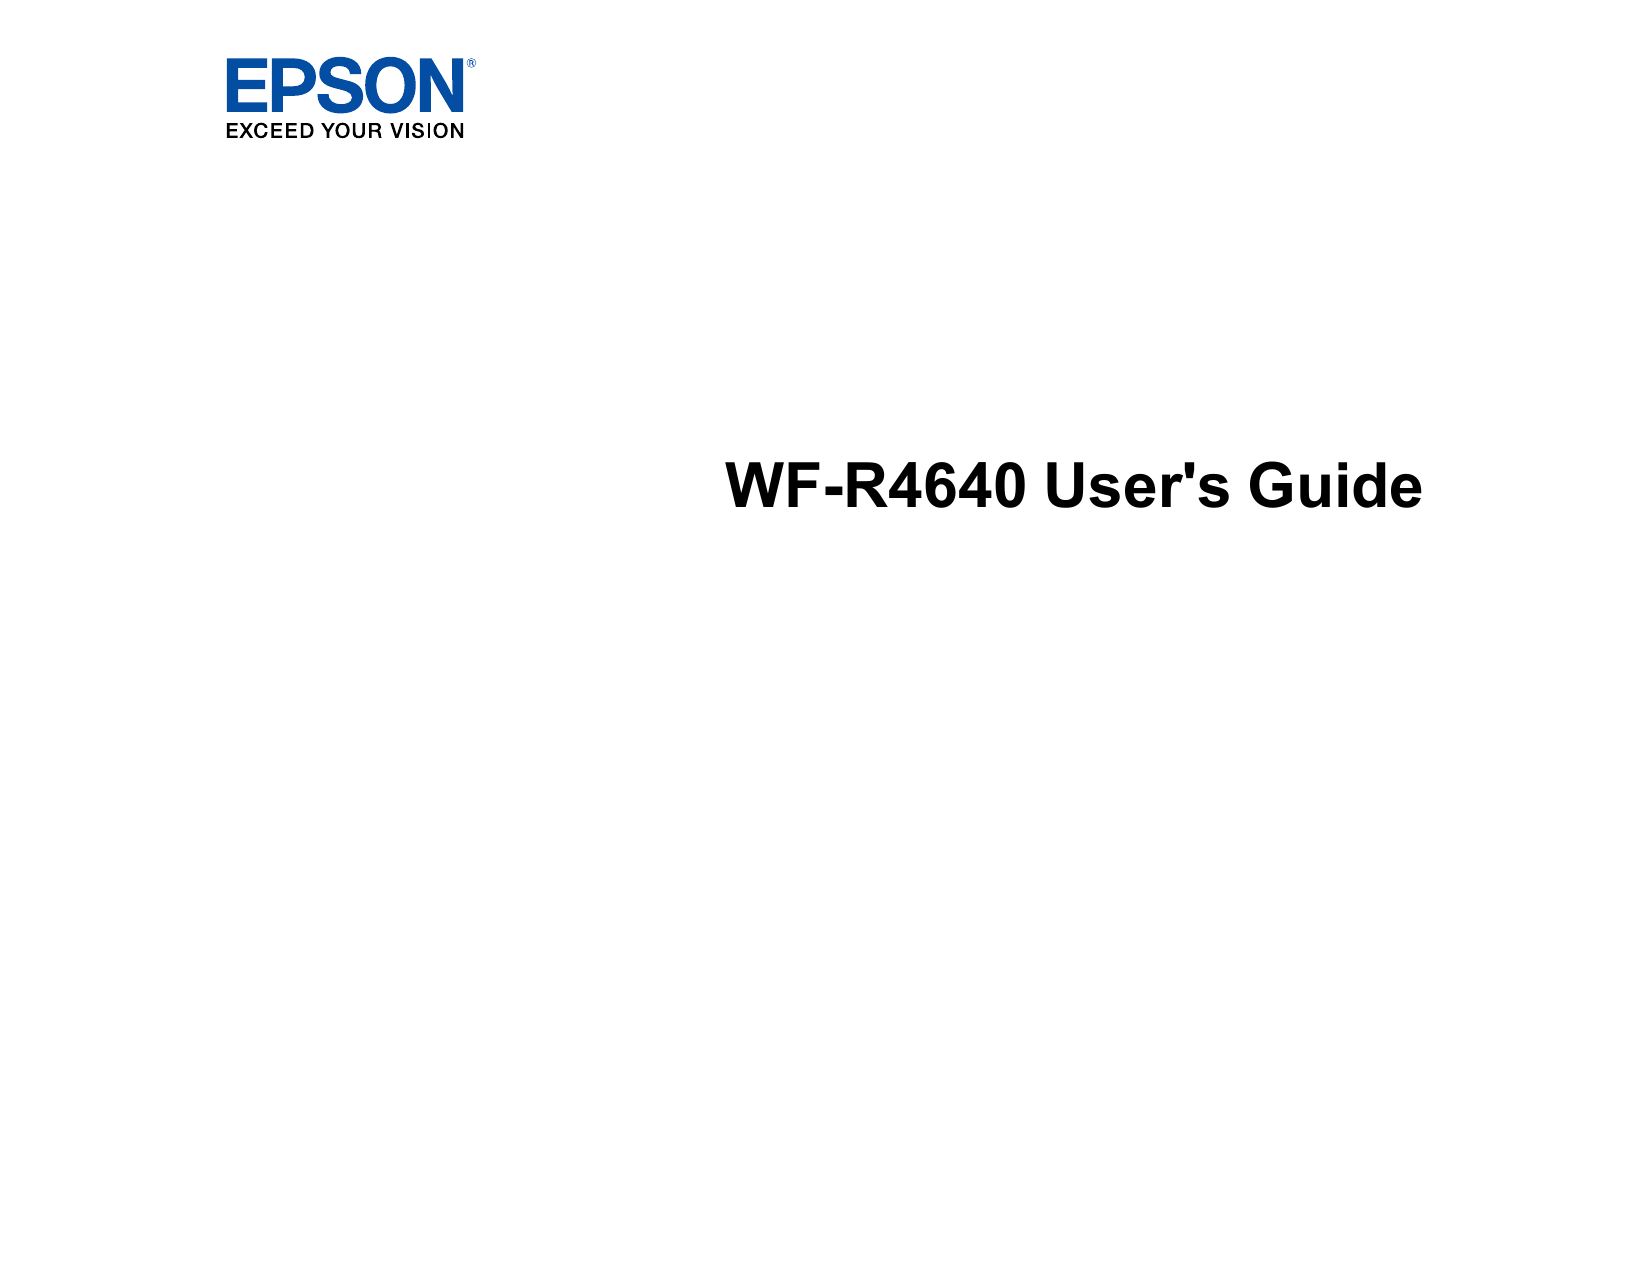 Epson Workforce Pro Wf R4640 Users Guide Manualzz 2593